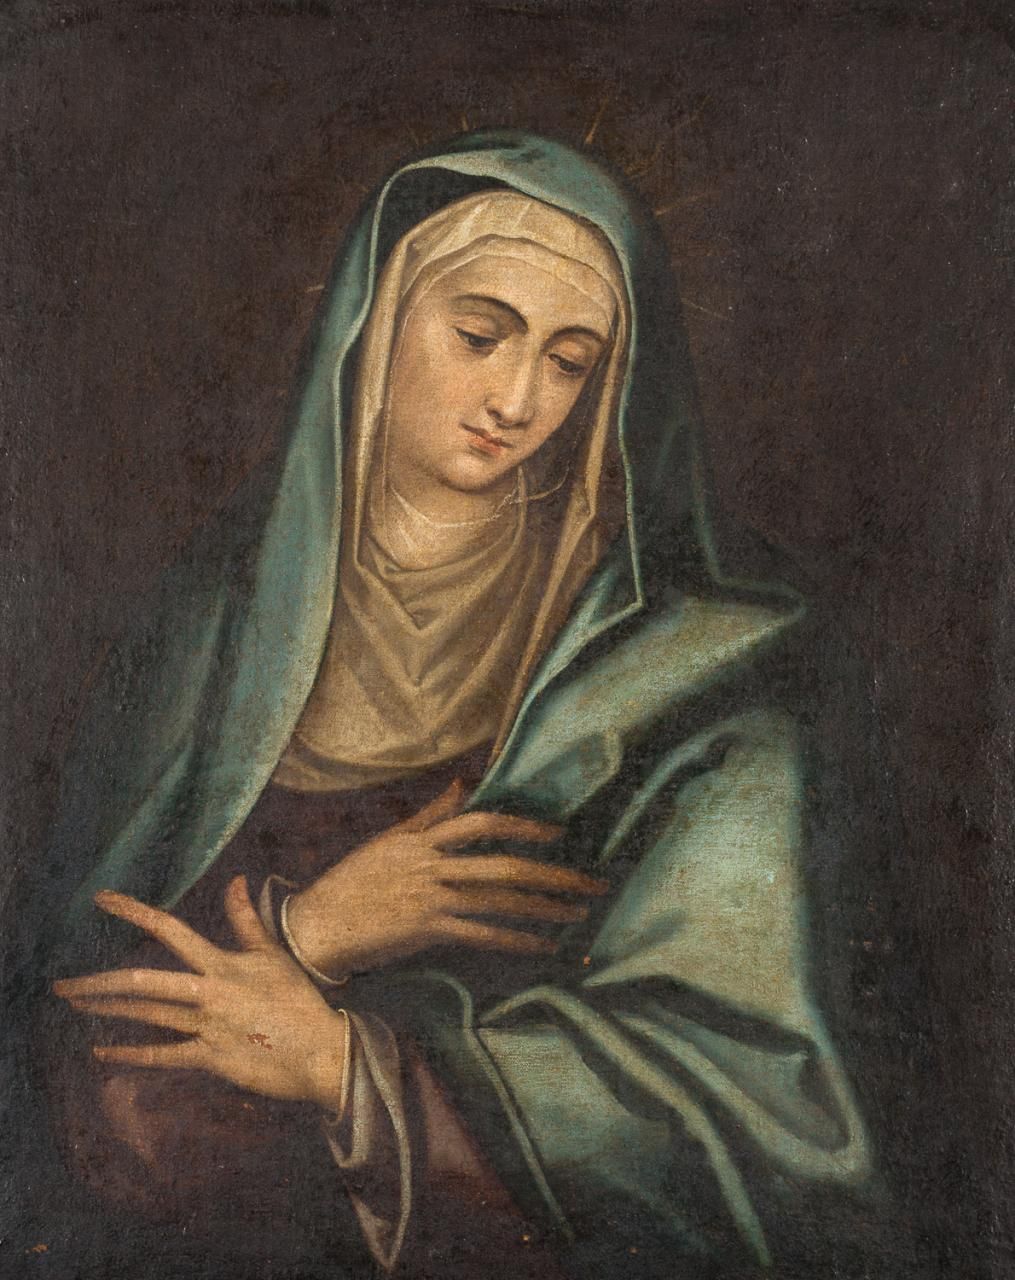 ESCUELA ESPAÑOLA, Fns. S. XVII Virgen Dolorosa
Óleo sobre lienzo
91 x 76 cm